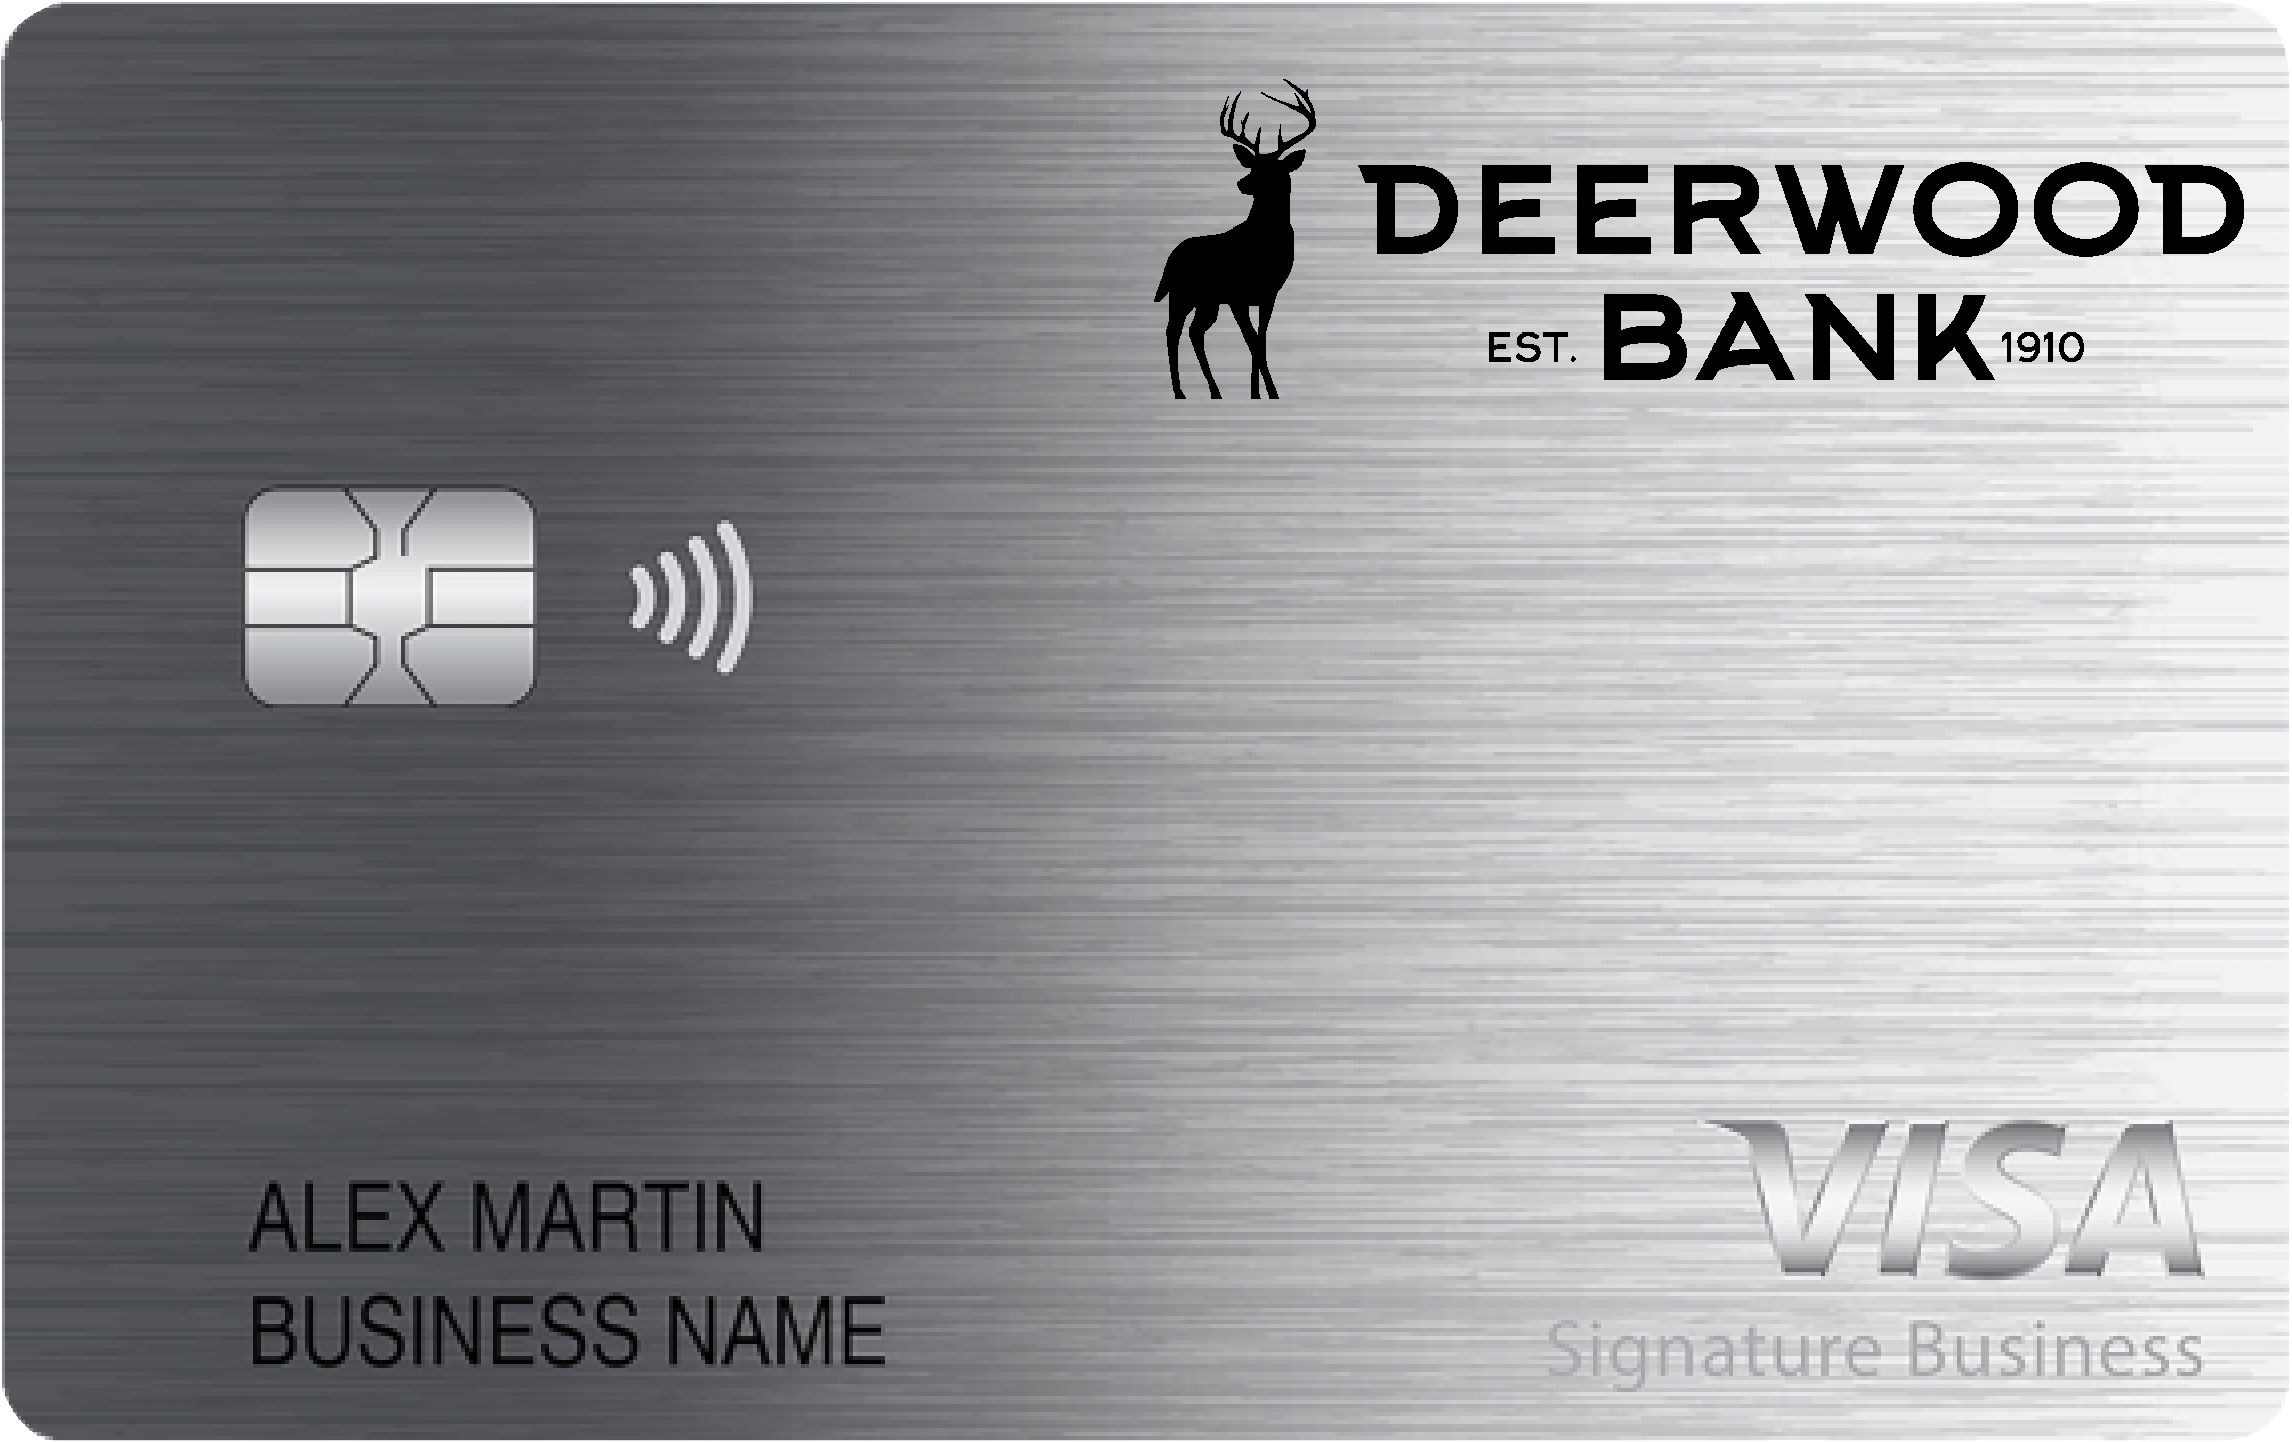 Deerwood Bank Smart Business Rewards Card